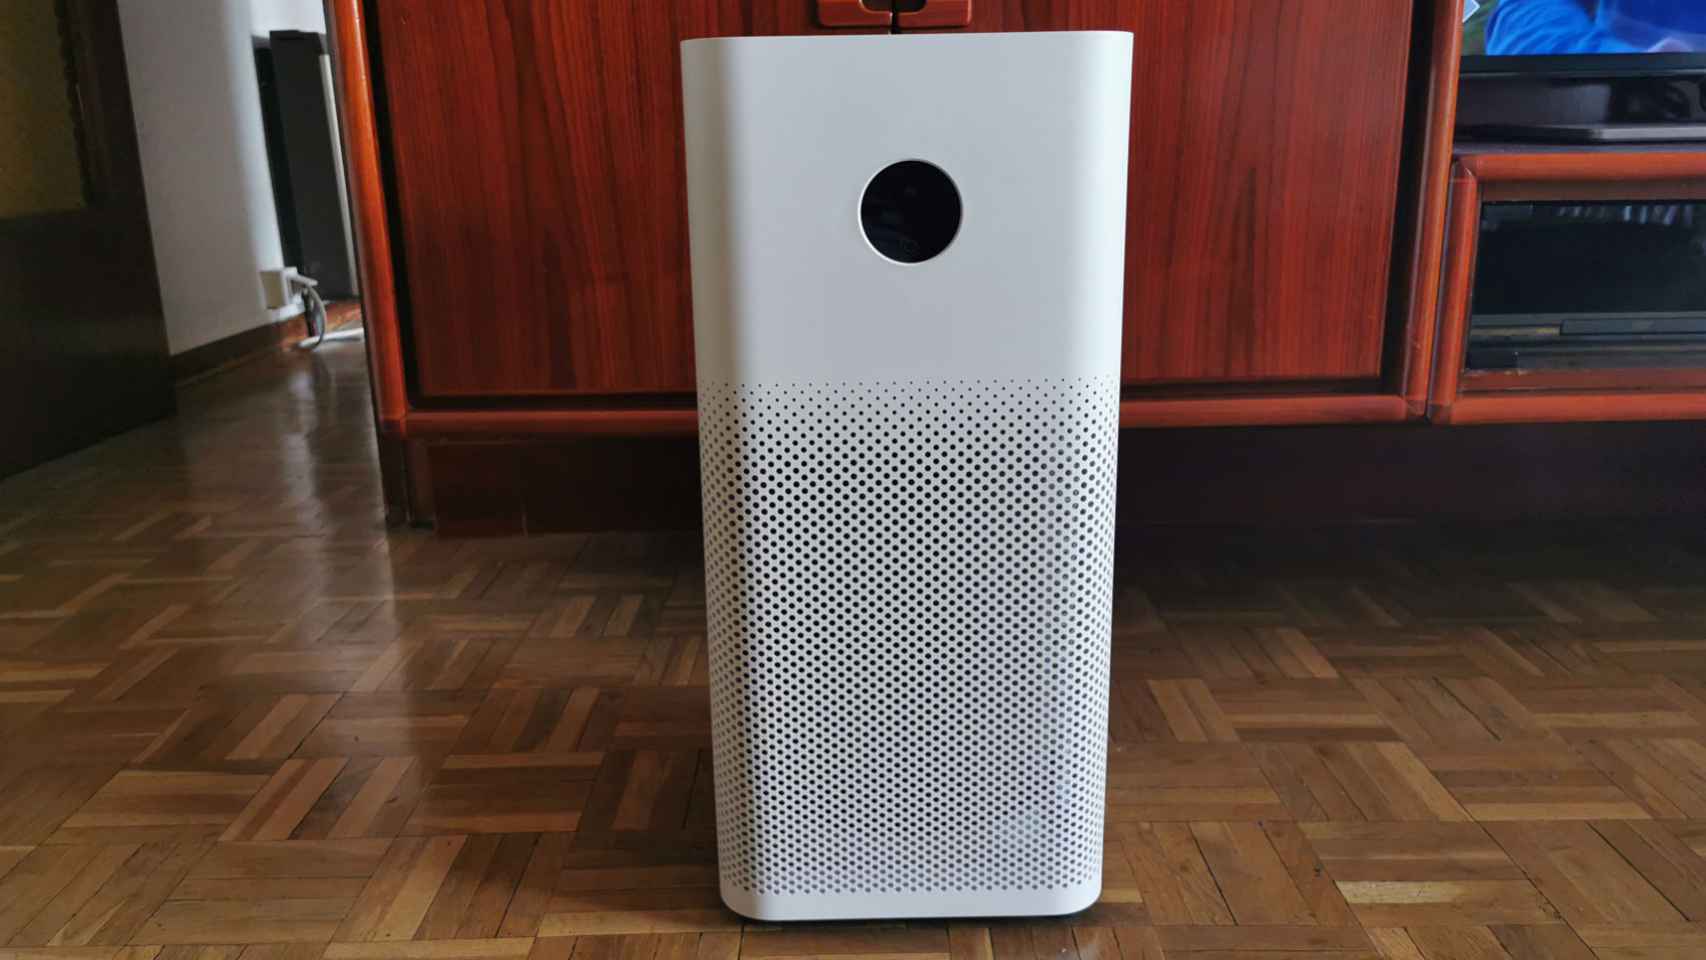 Reseña del purificador de aire Xiaomi Mi Air Purifier 3H